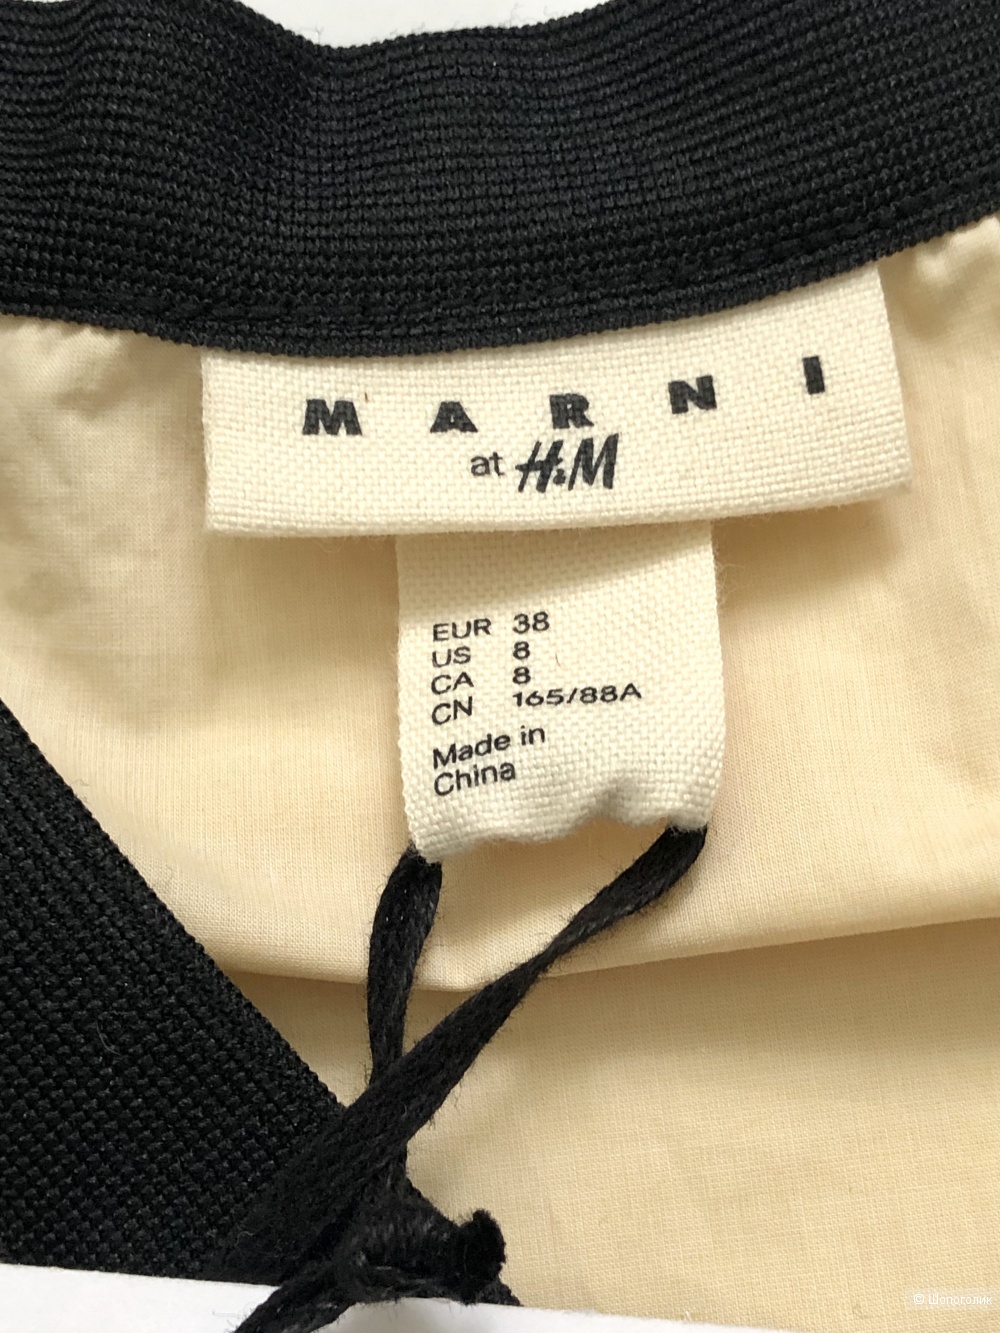 Блузка Marni AT H&M размер М